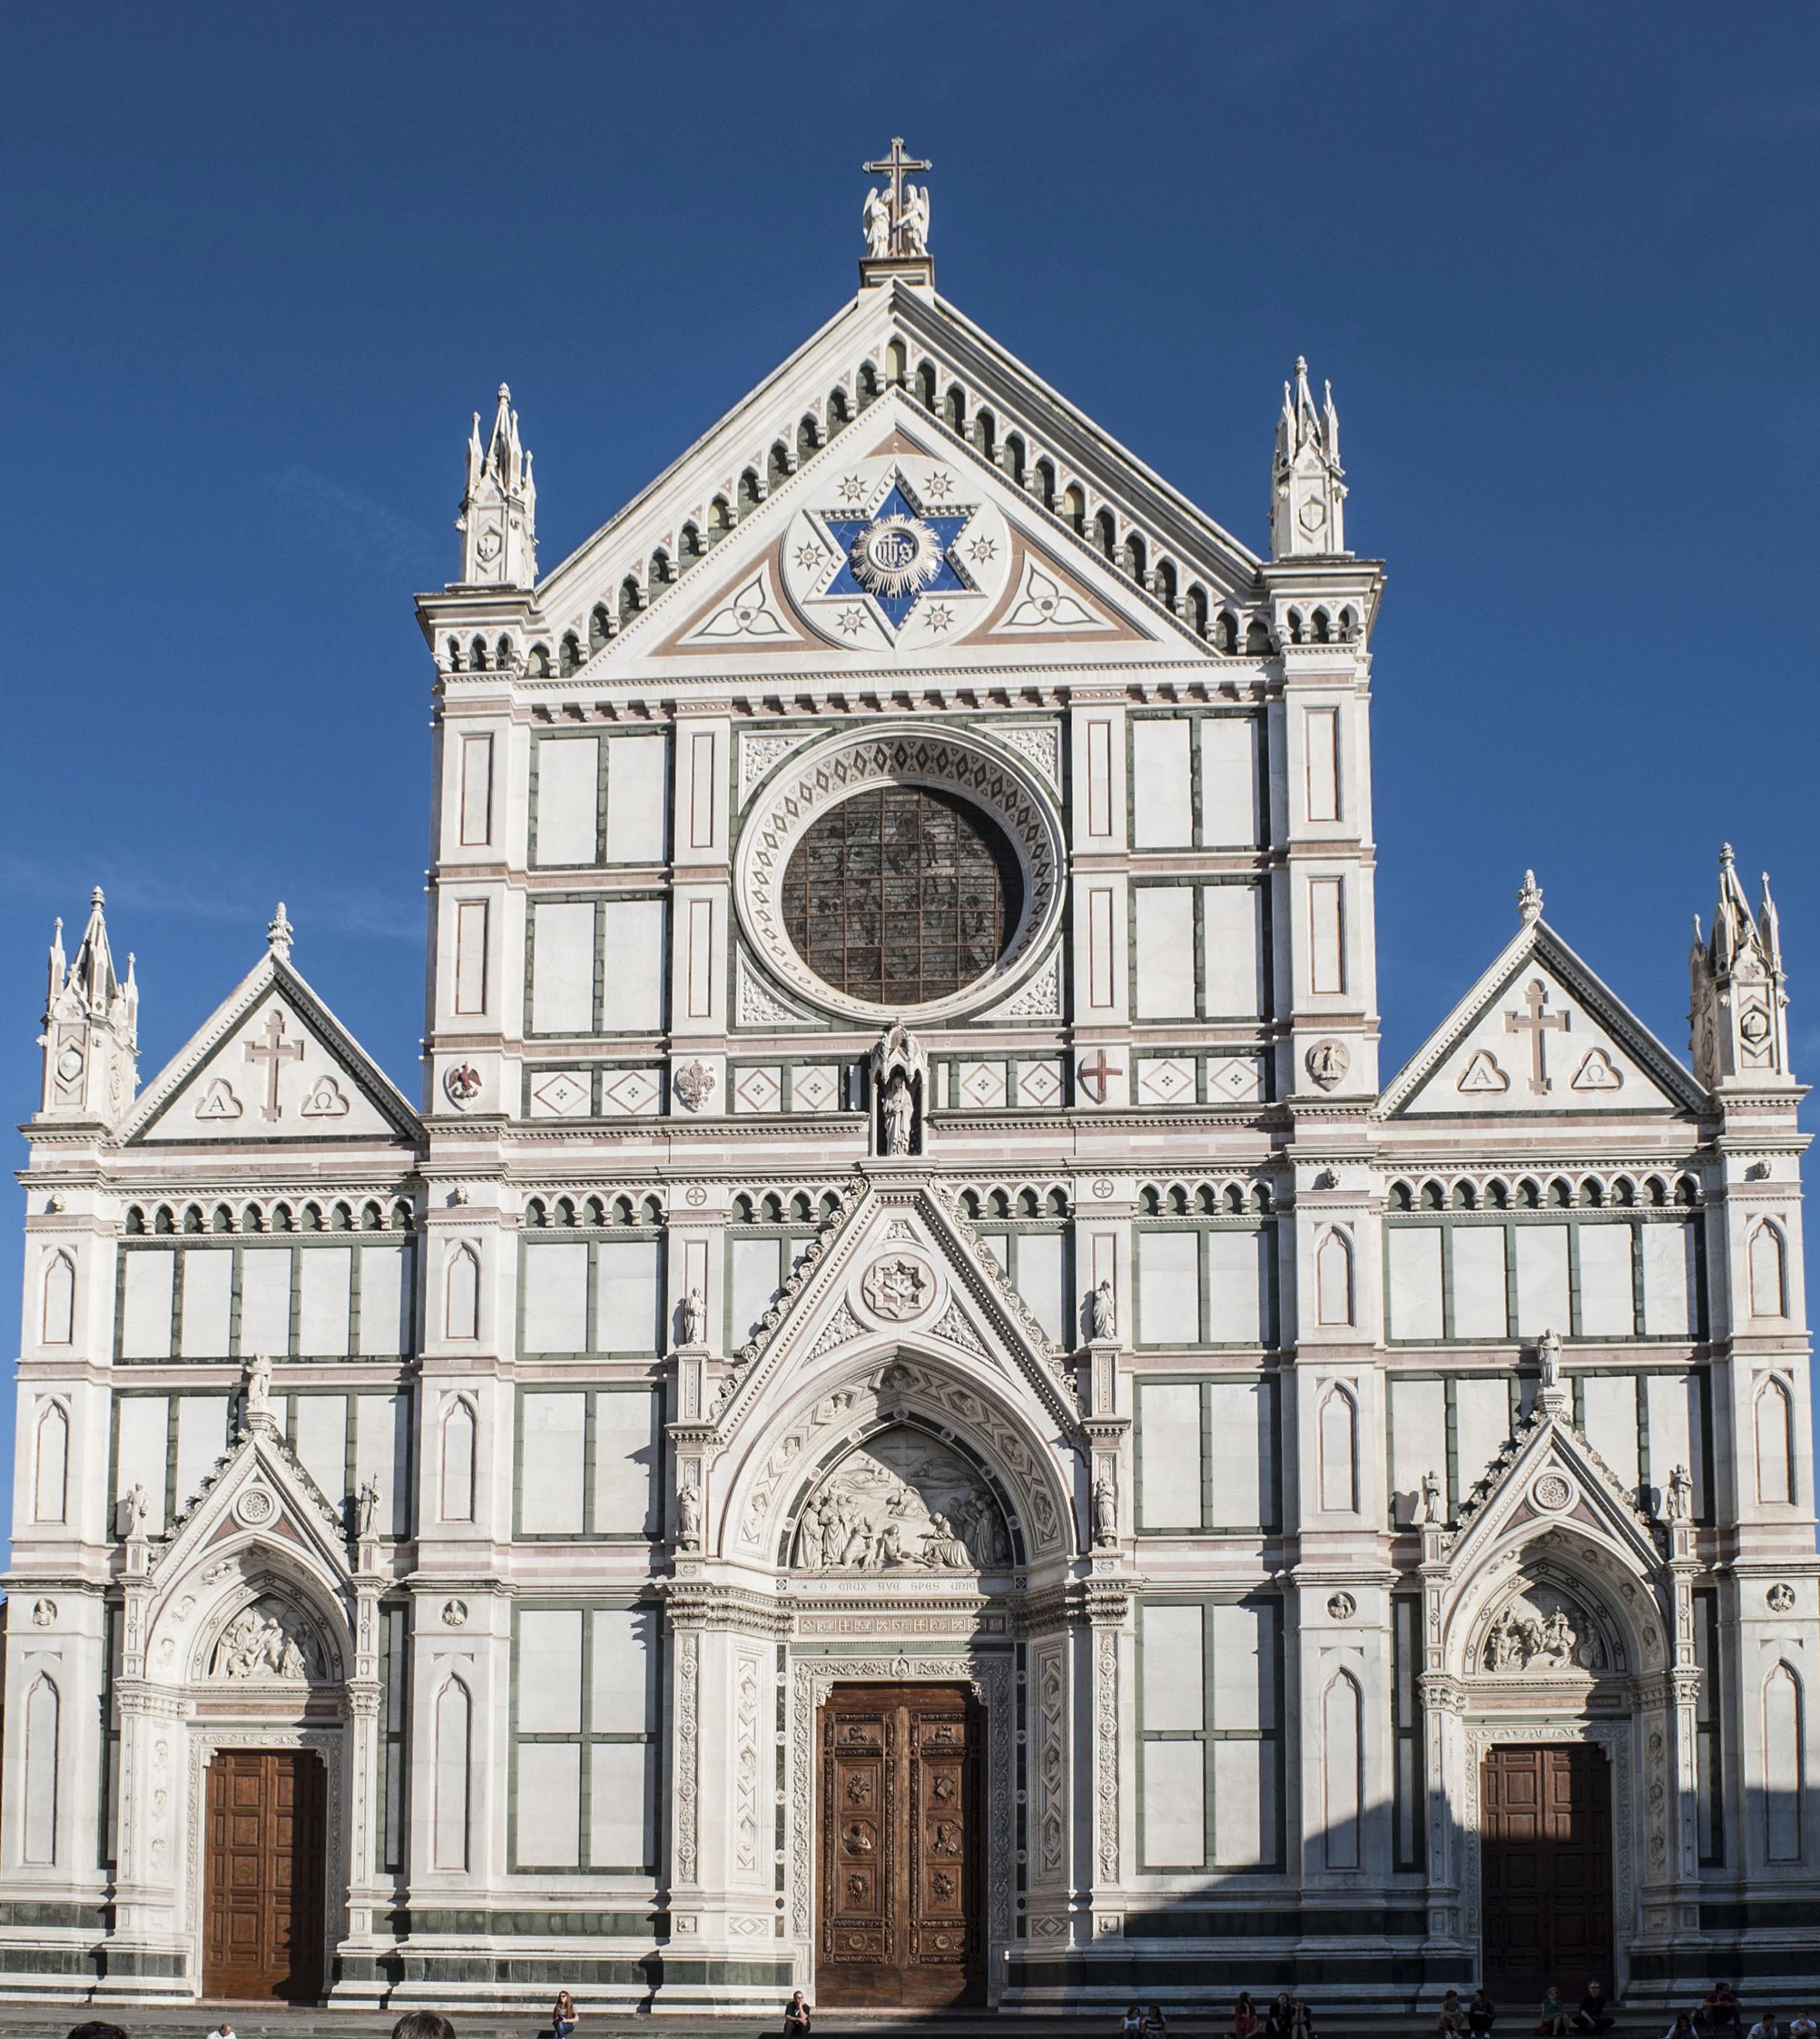 Basilica of Santa Croce, Italy